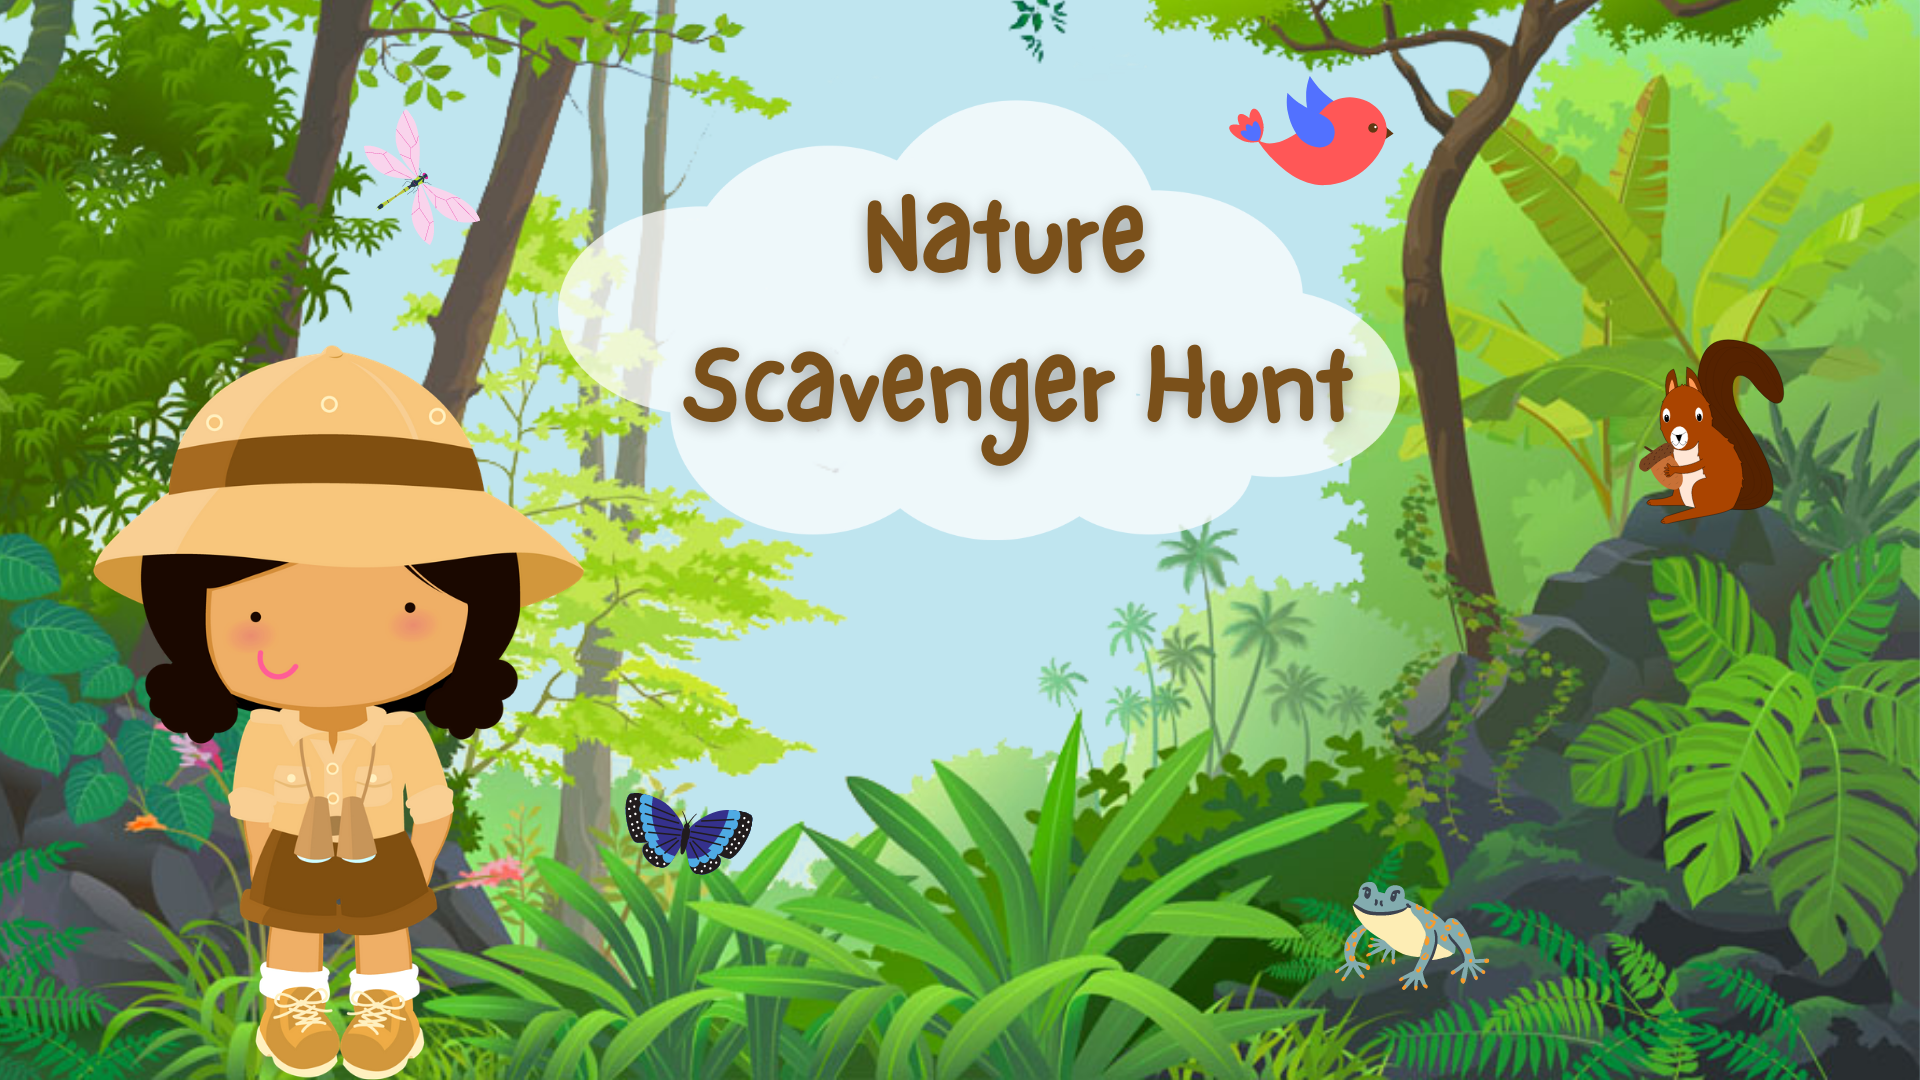 Nature Scavenger Hunt for Kids Nature Detective Quest Activity